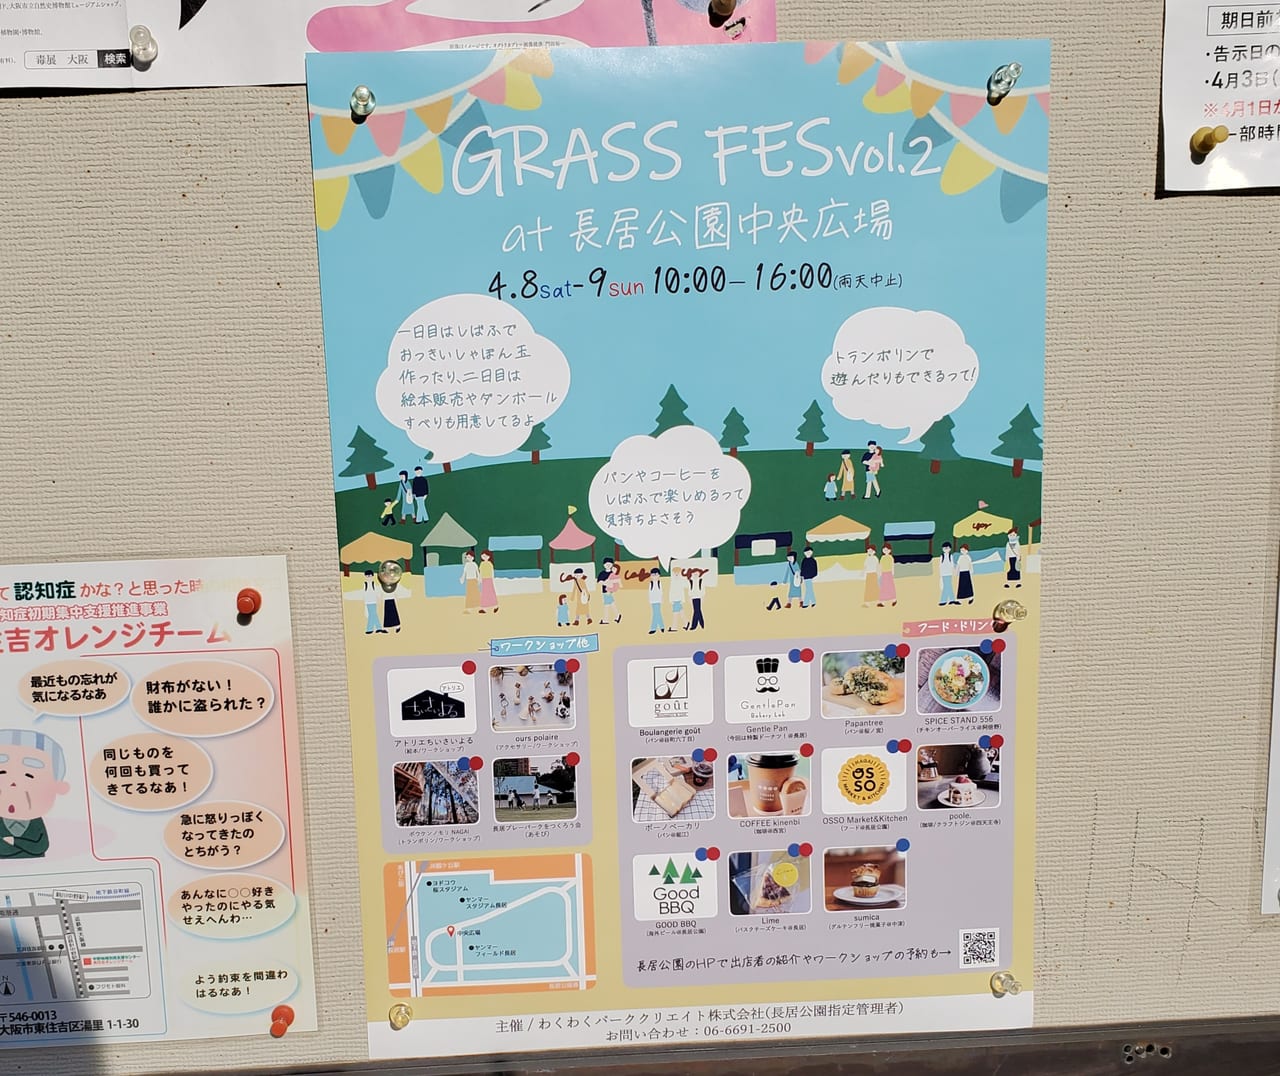 GRASS FES